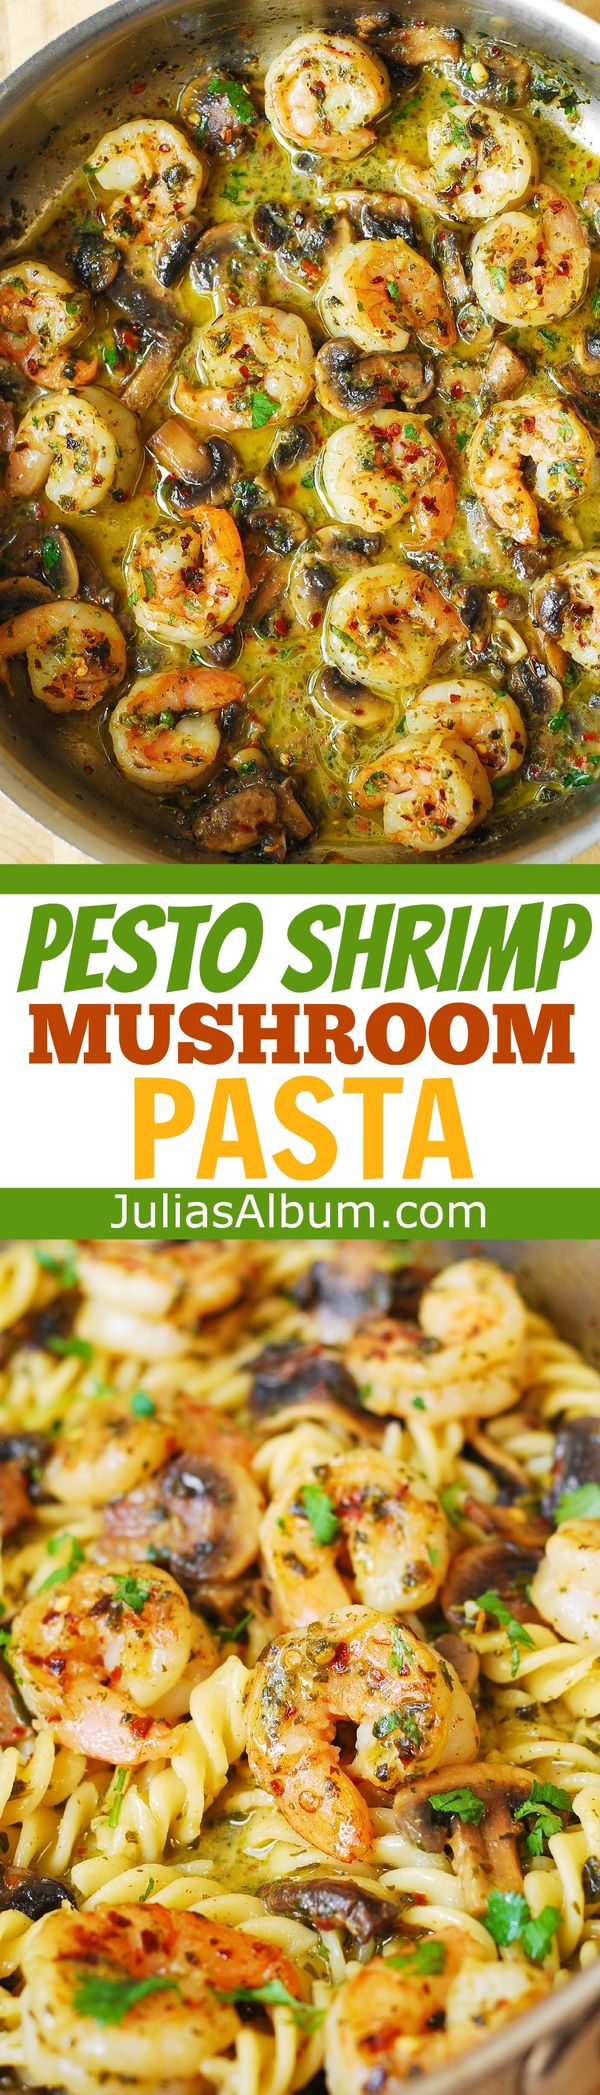 Pesto Shrimp Mushroom Pasta